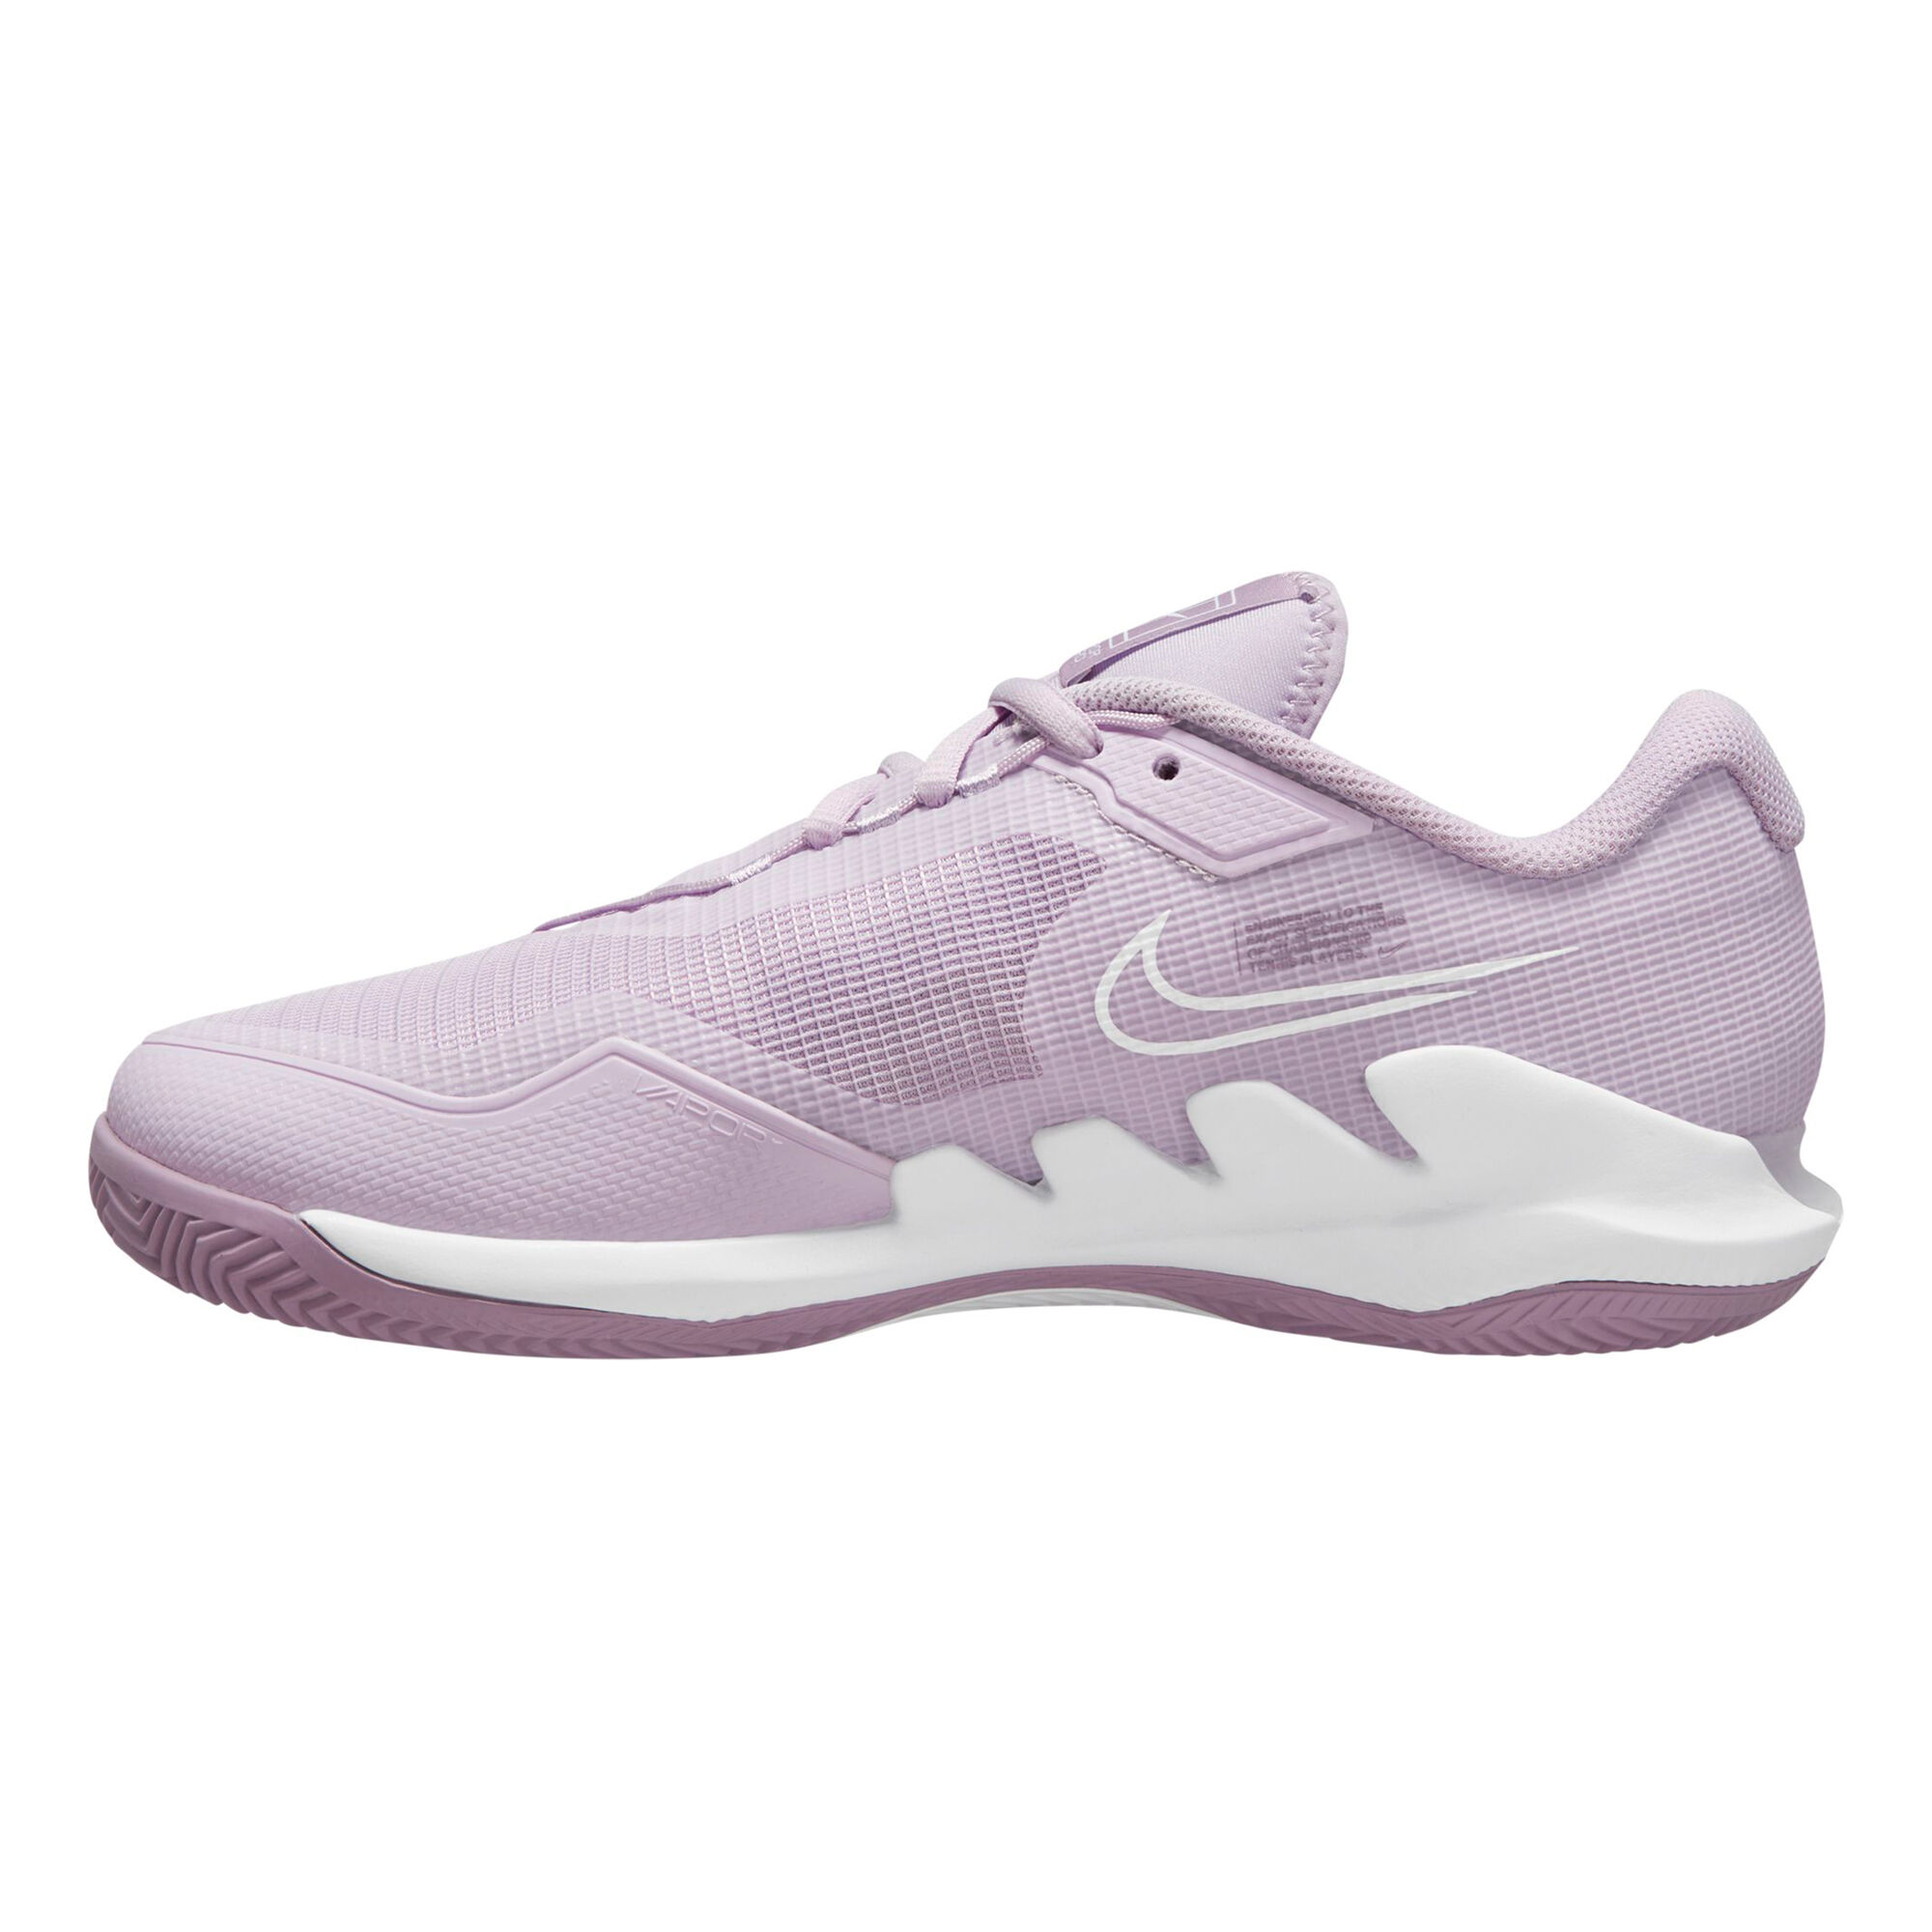 buy Nike Air Vapor Pro Court Shoe Women - Lilac, White online | Tennis-Point